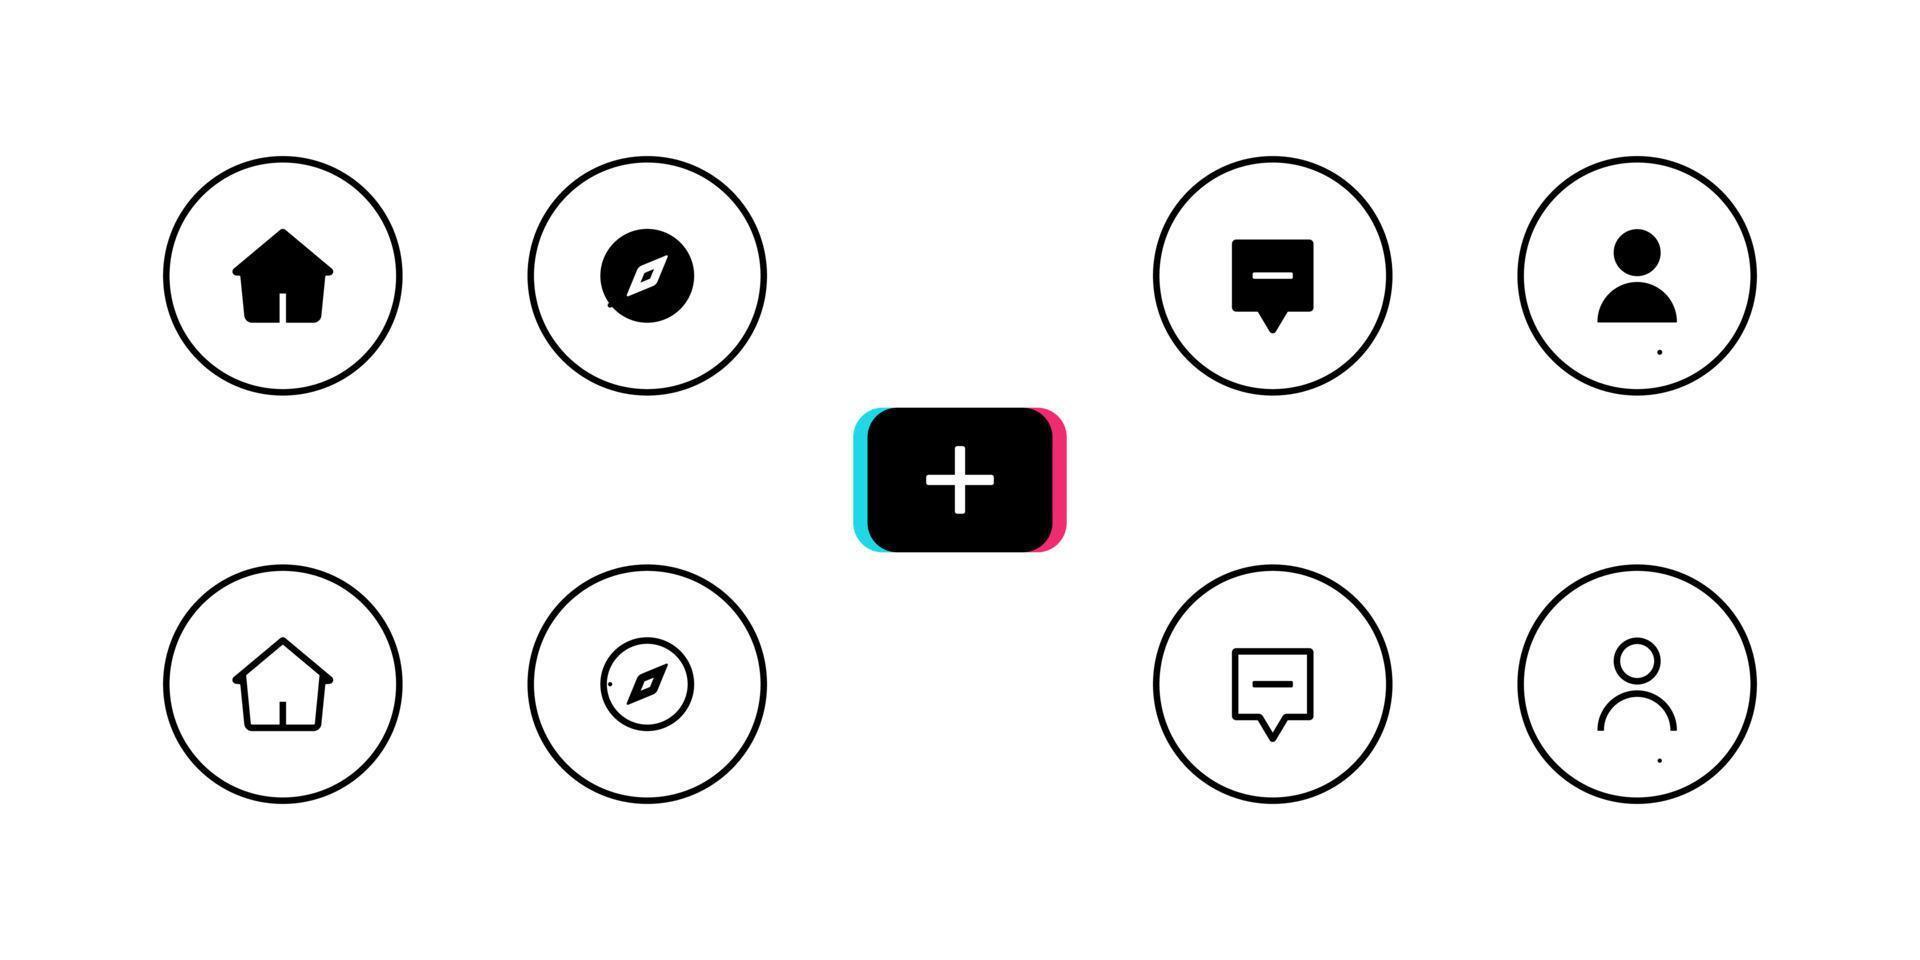 Social media menu icon. Home, discover, create, inbox, and profile vector